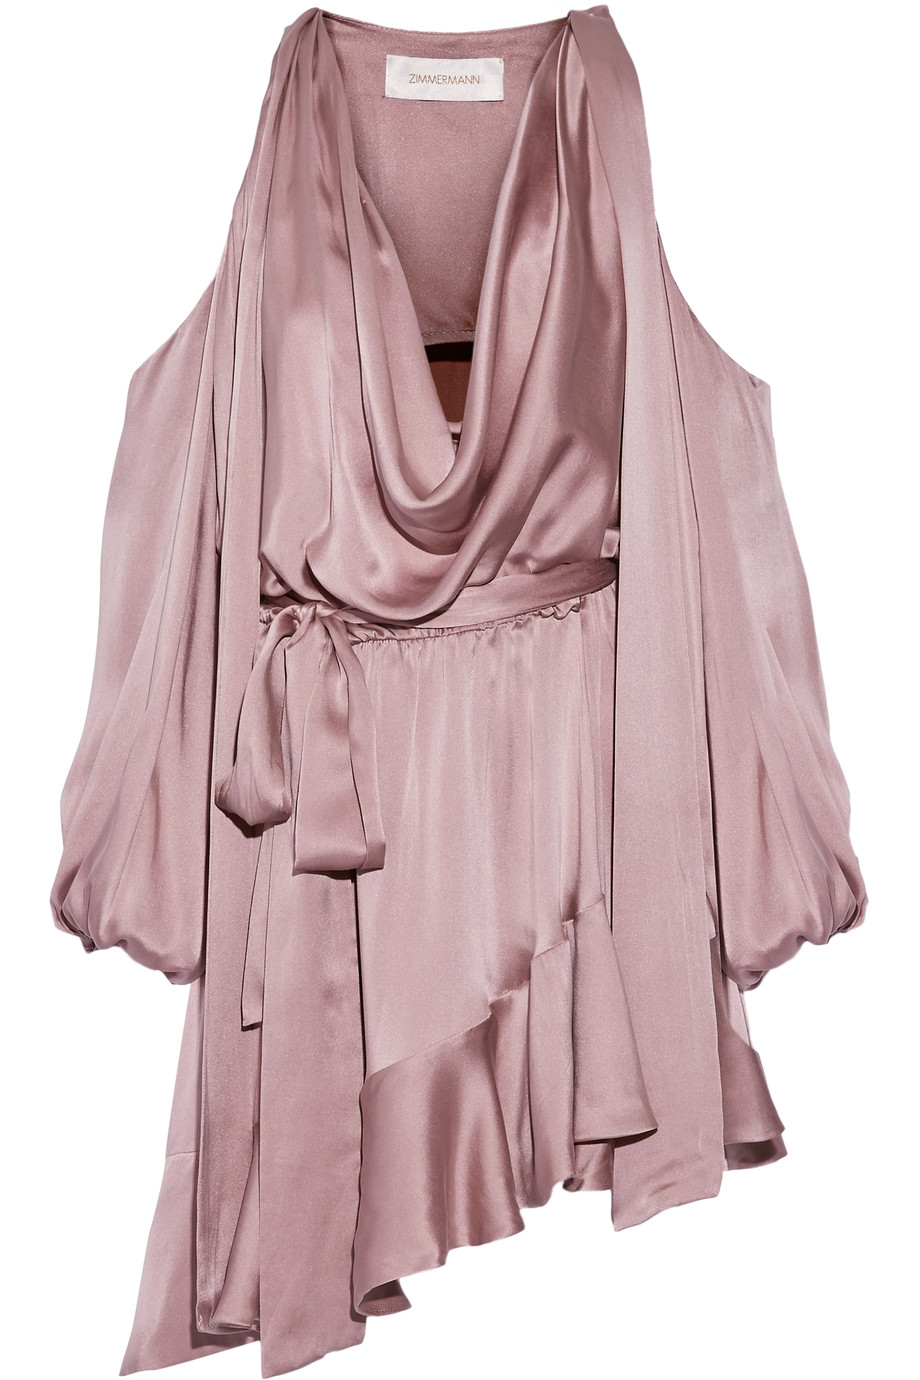 Zimmermann Billow Cold-shoulder Washed-silk Mini Dress | ModeSens